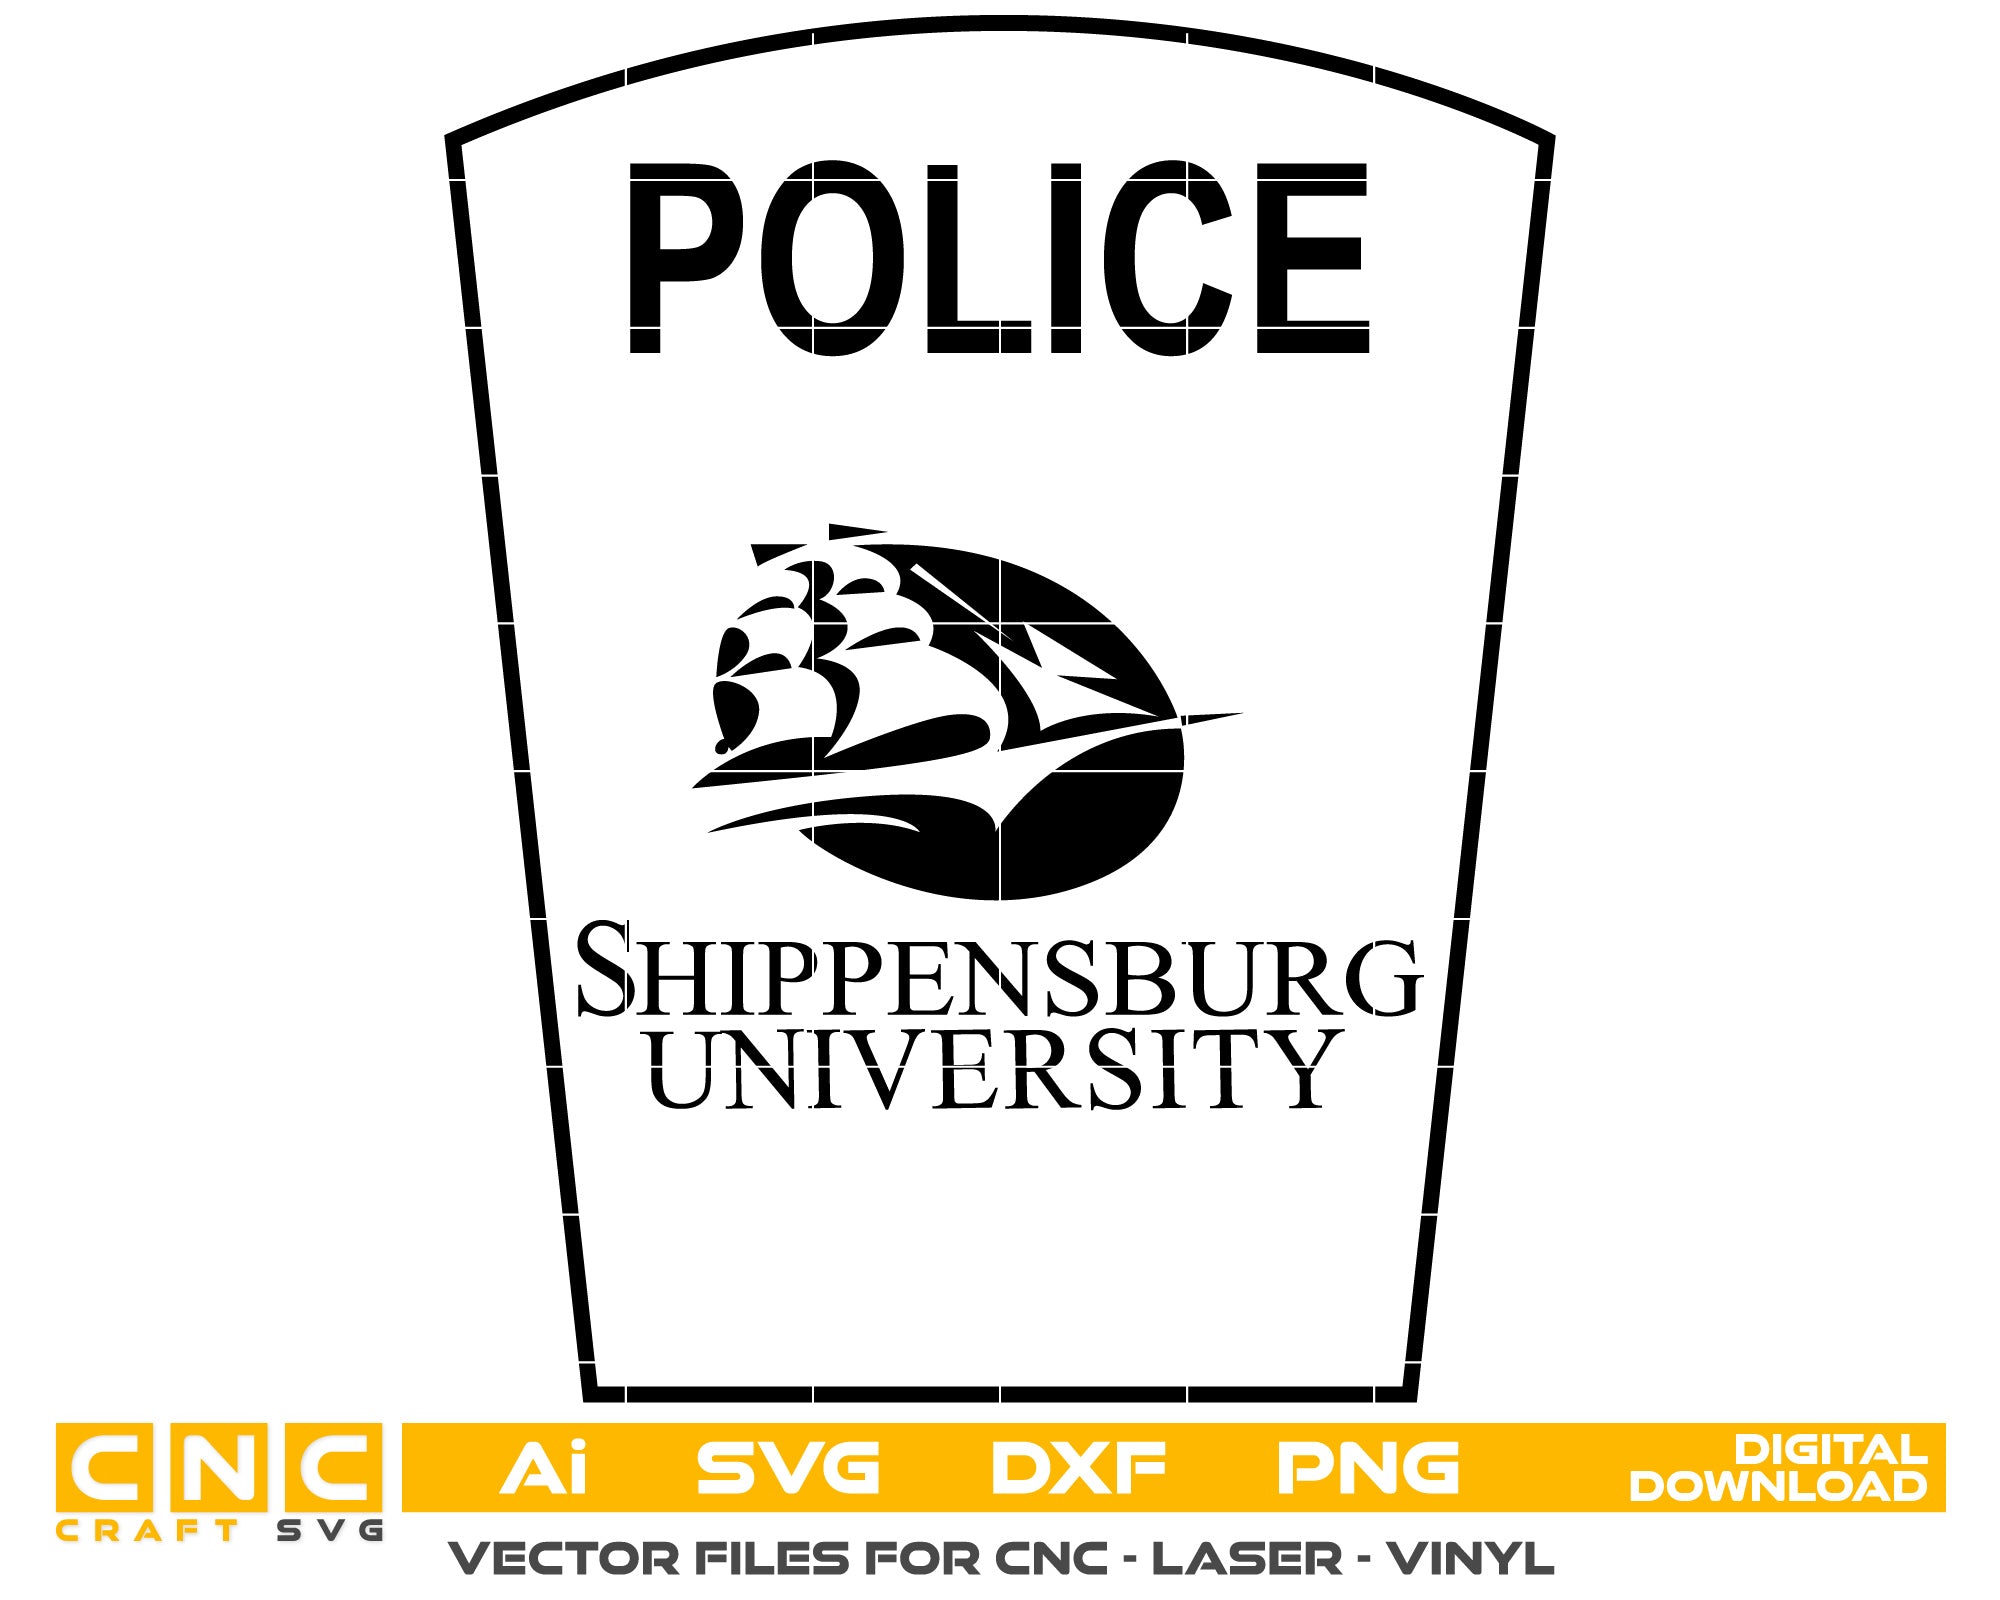 Shippensburg University Police Badge vector art